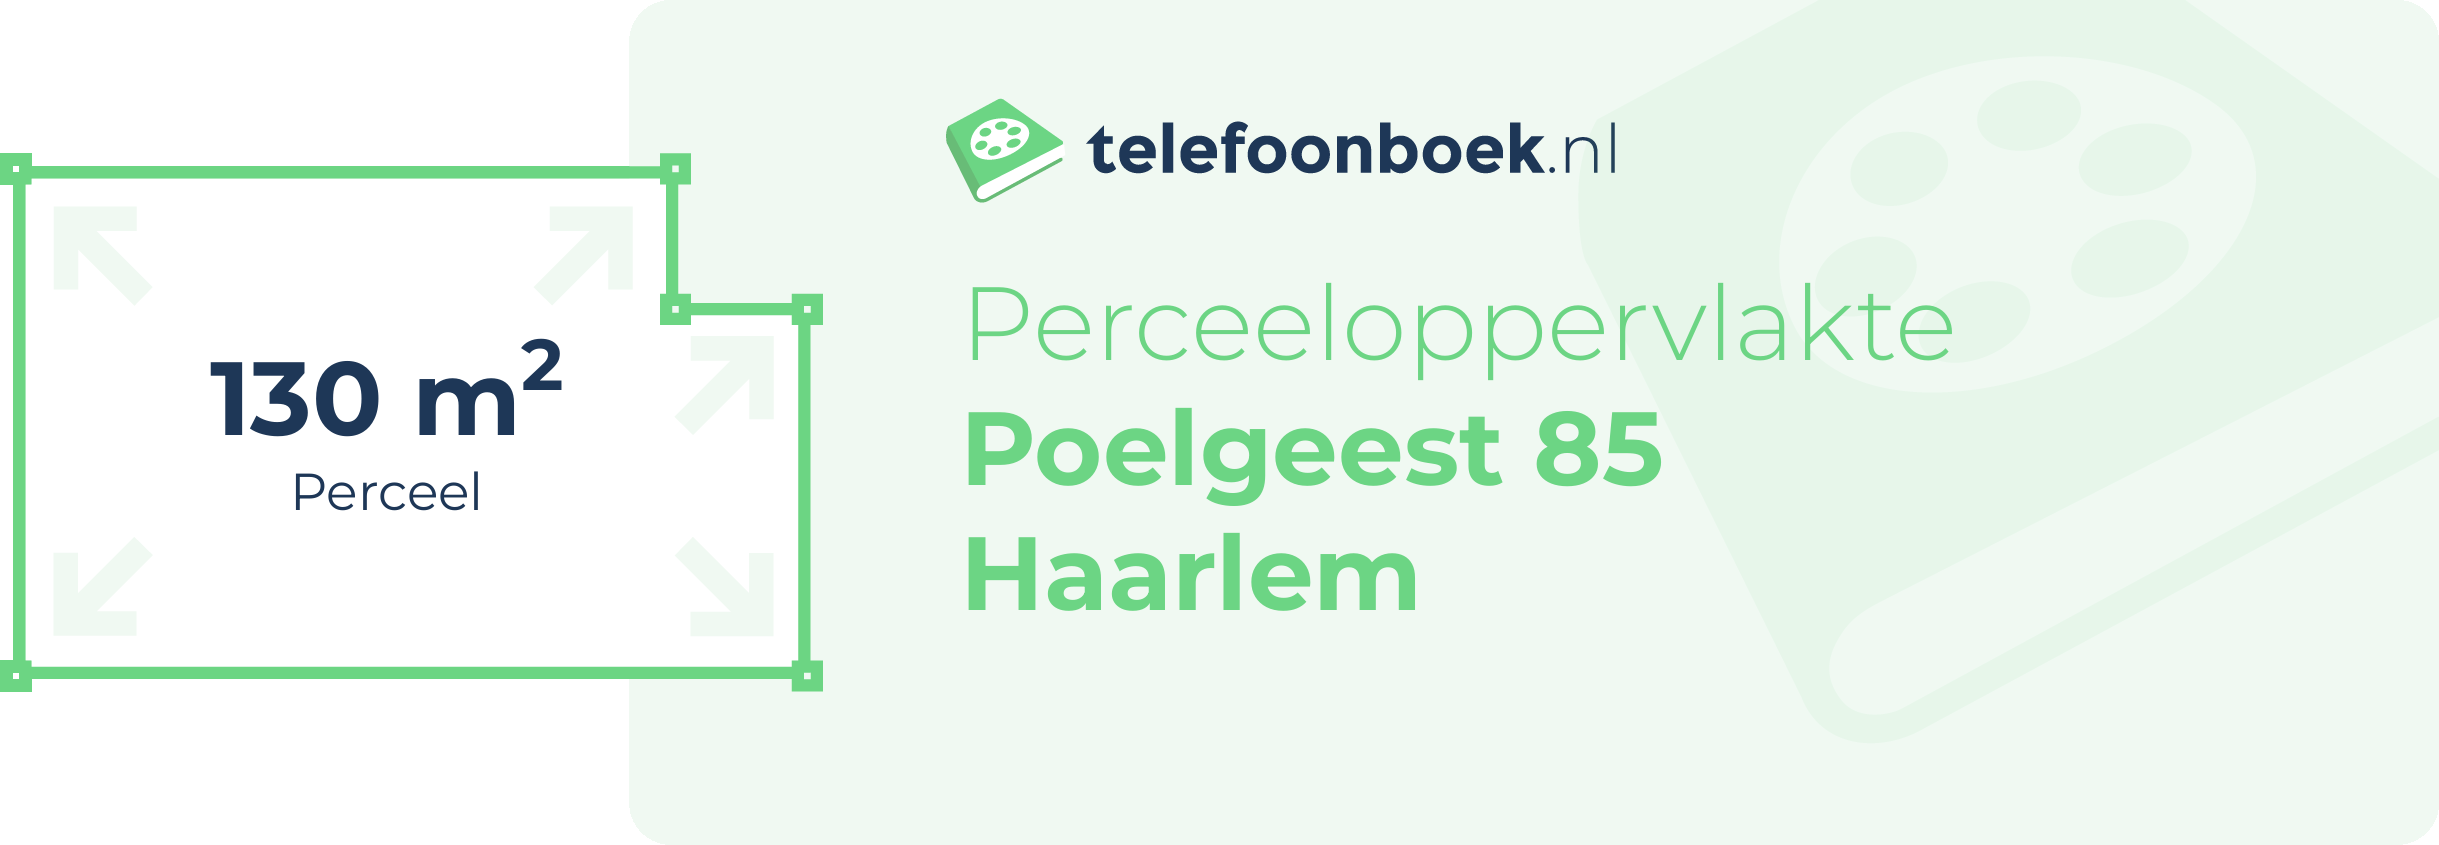 Perceeloppervlakte Poelgeest 85 Haarlem